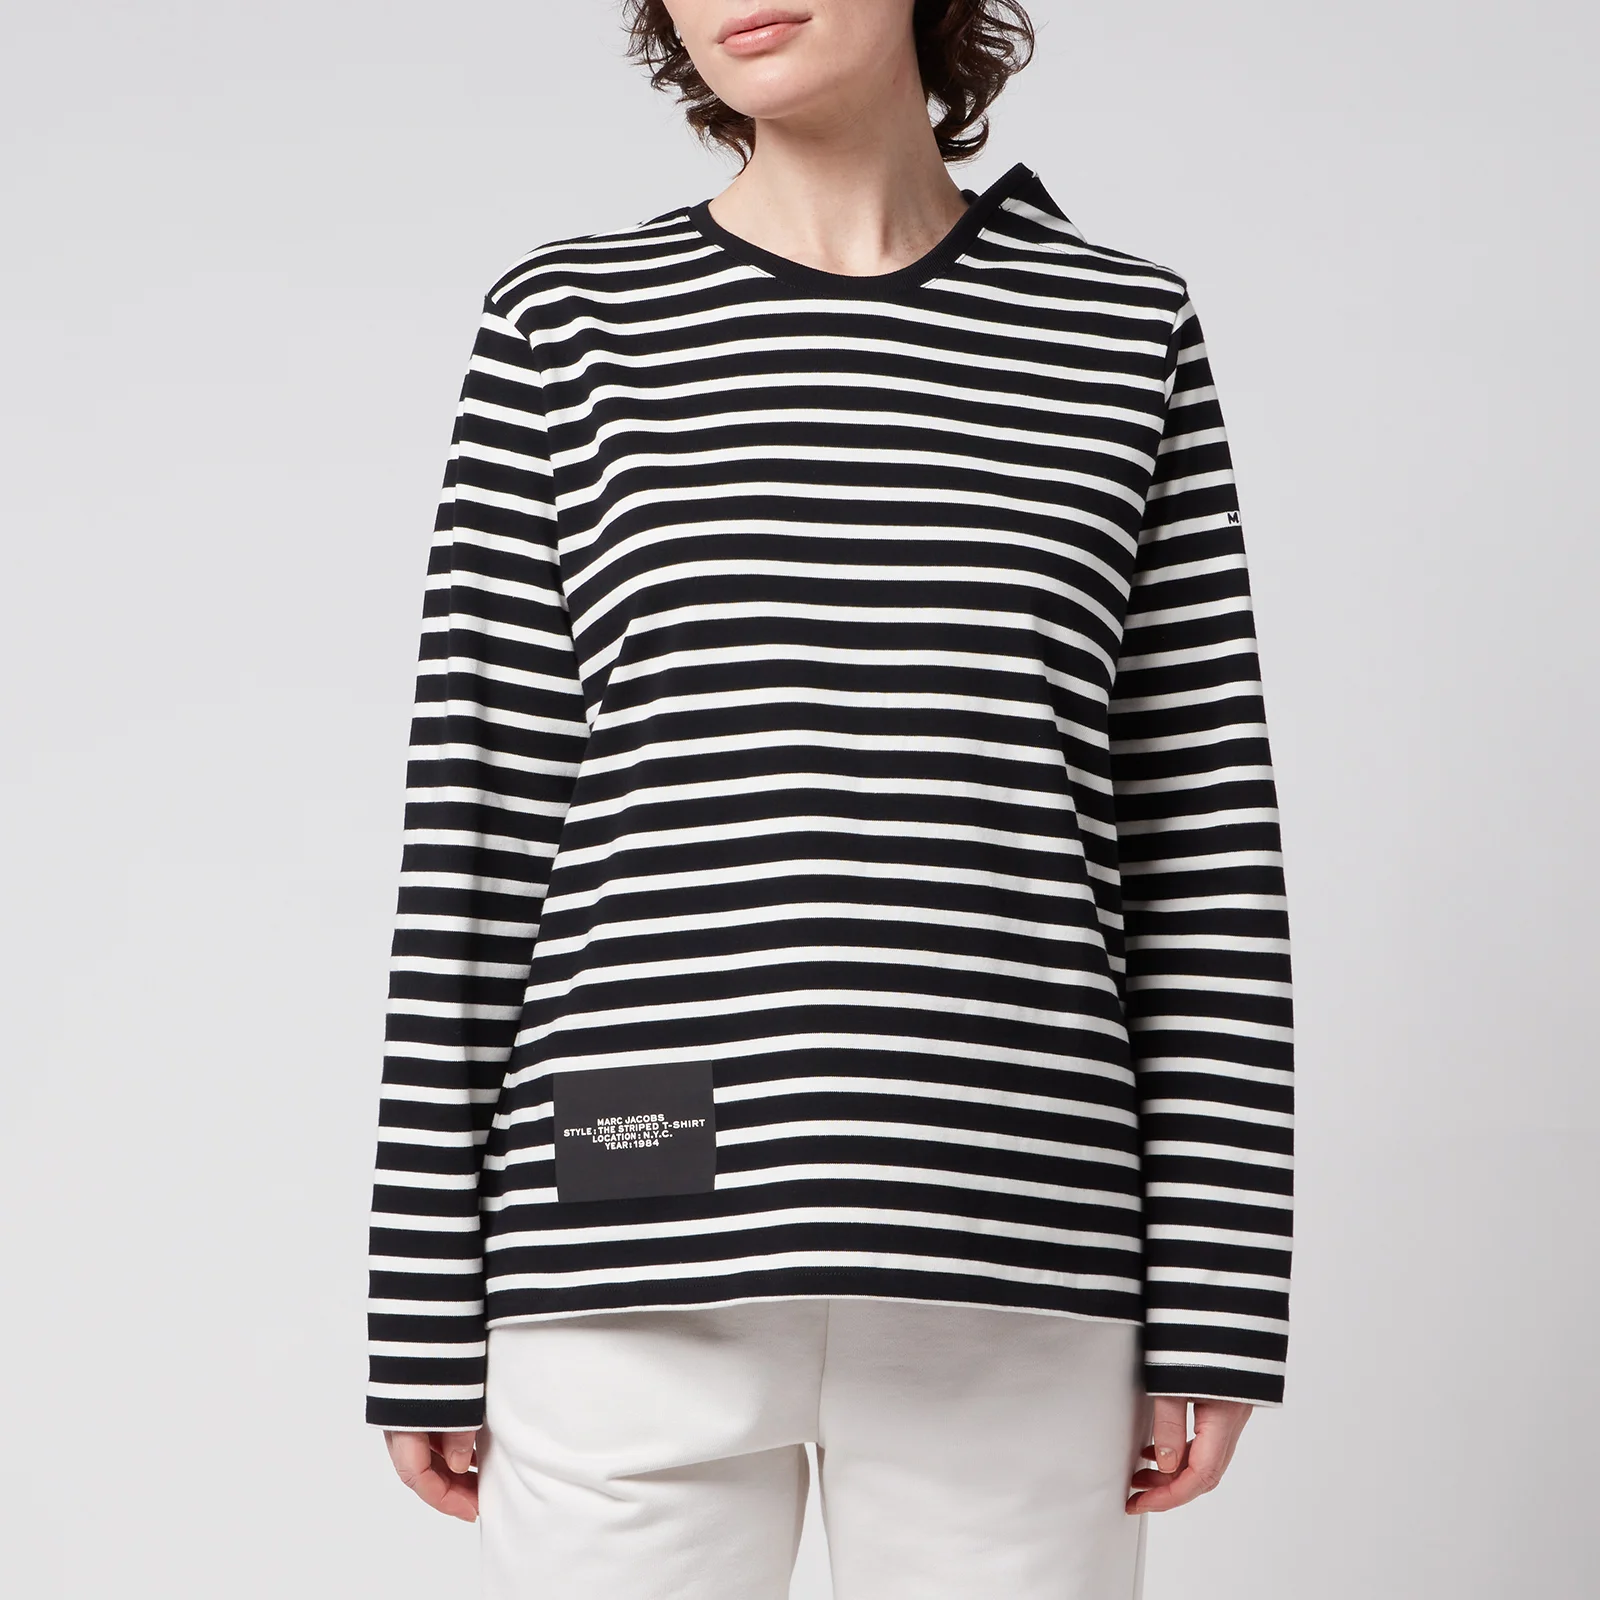 Marc Jacobs Women's The Striped T-Shirt - Black Multi Image 1